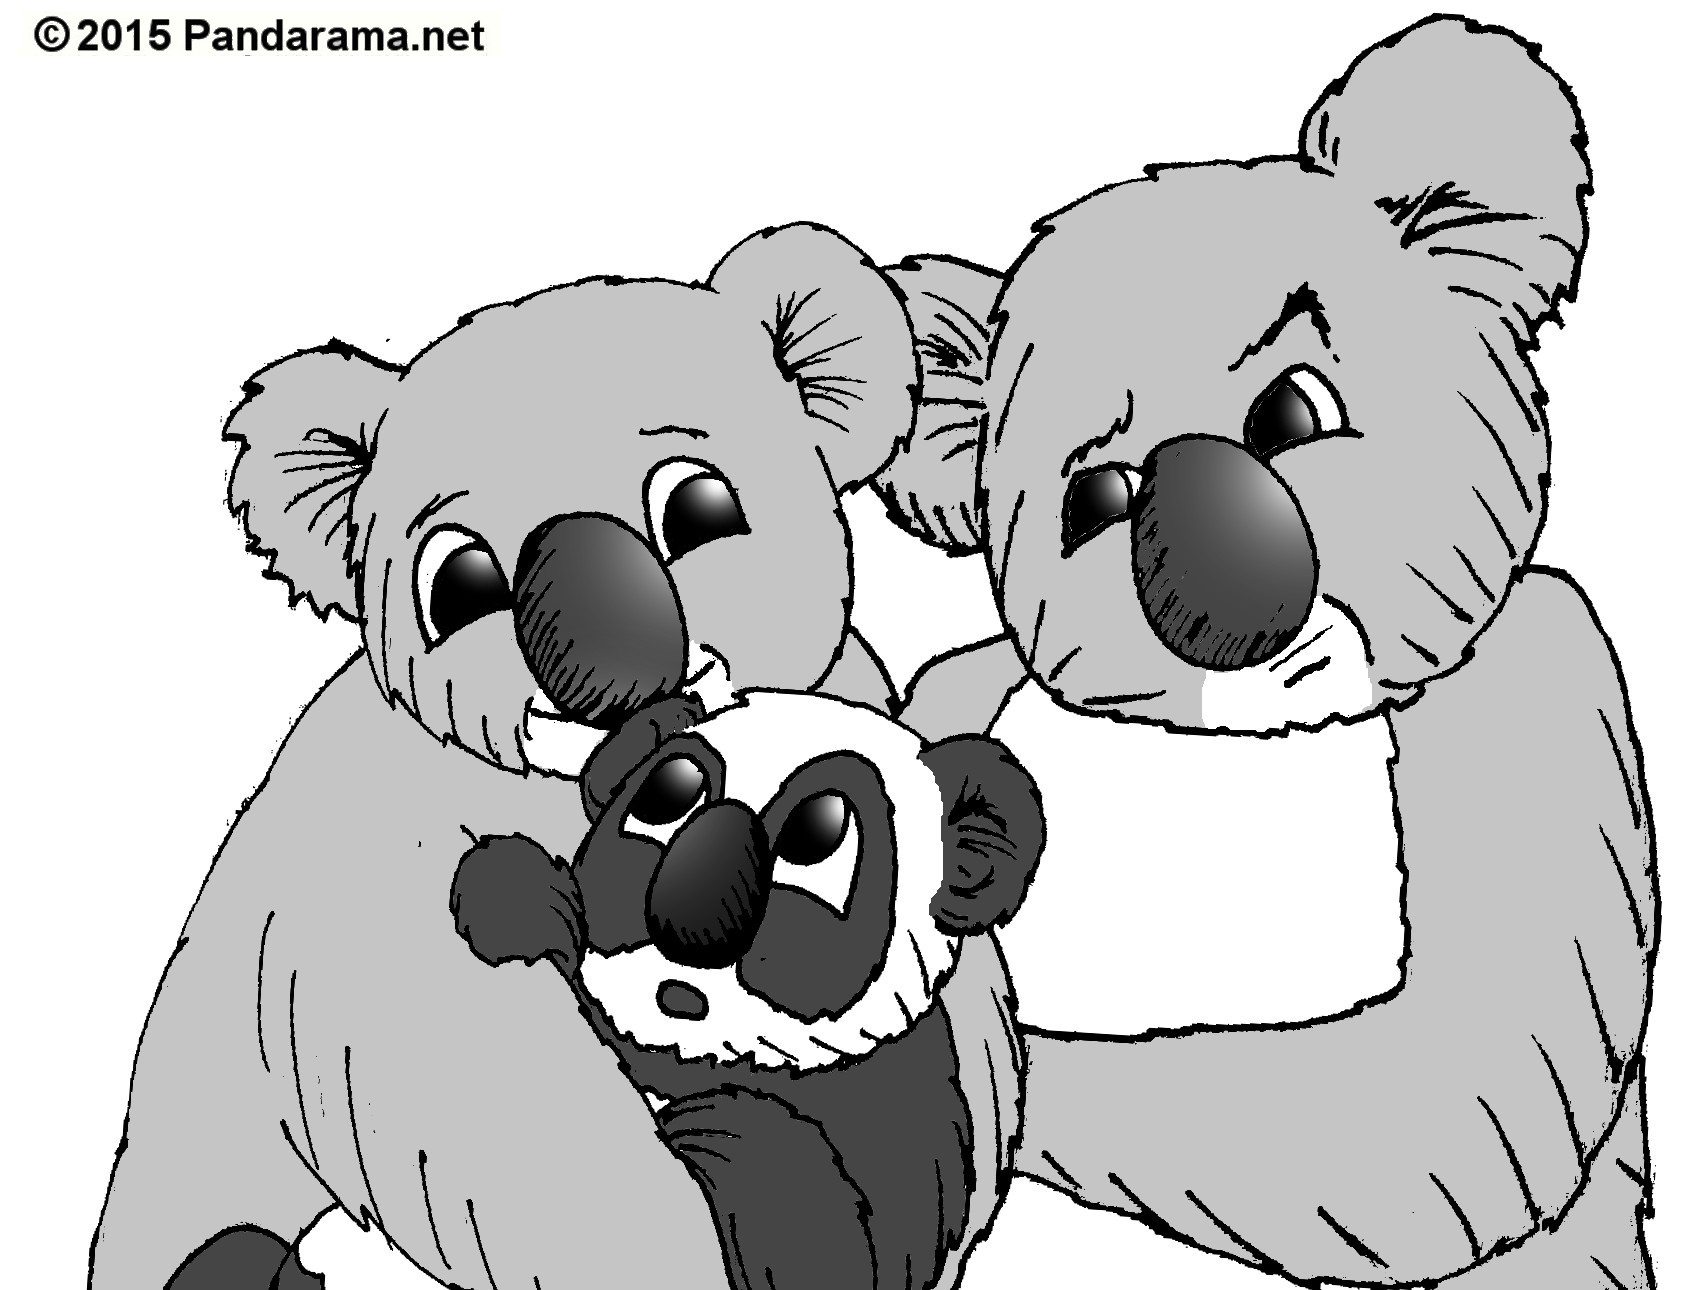 Pandarama cartoon of koala looking suspiciously at a koala holding a baby koala that is colored like a panda.